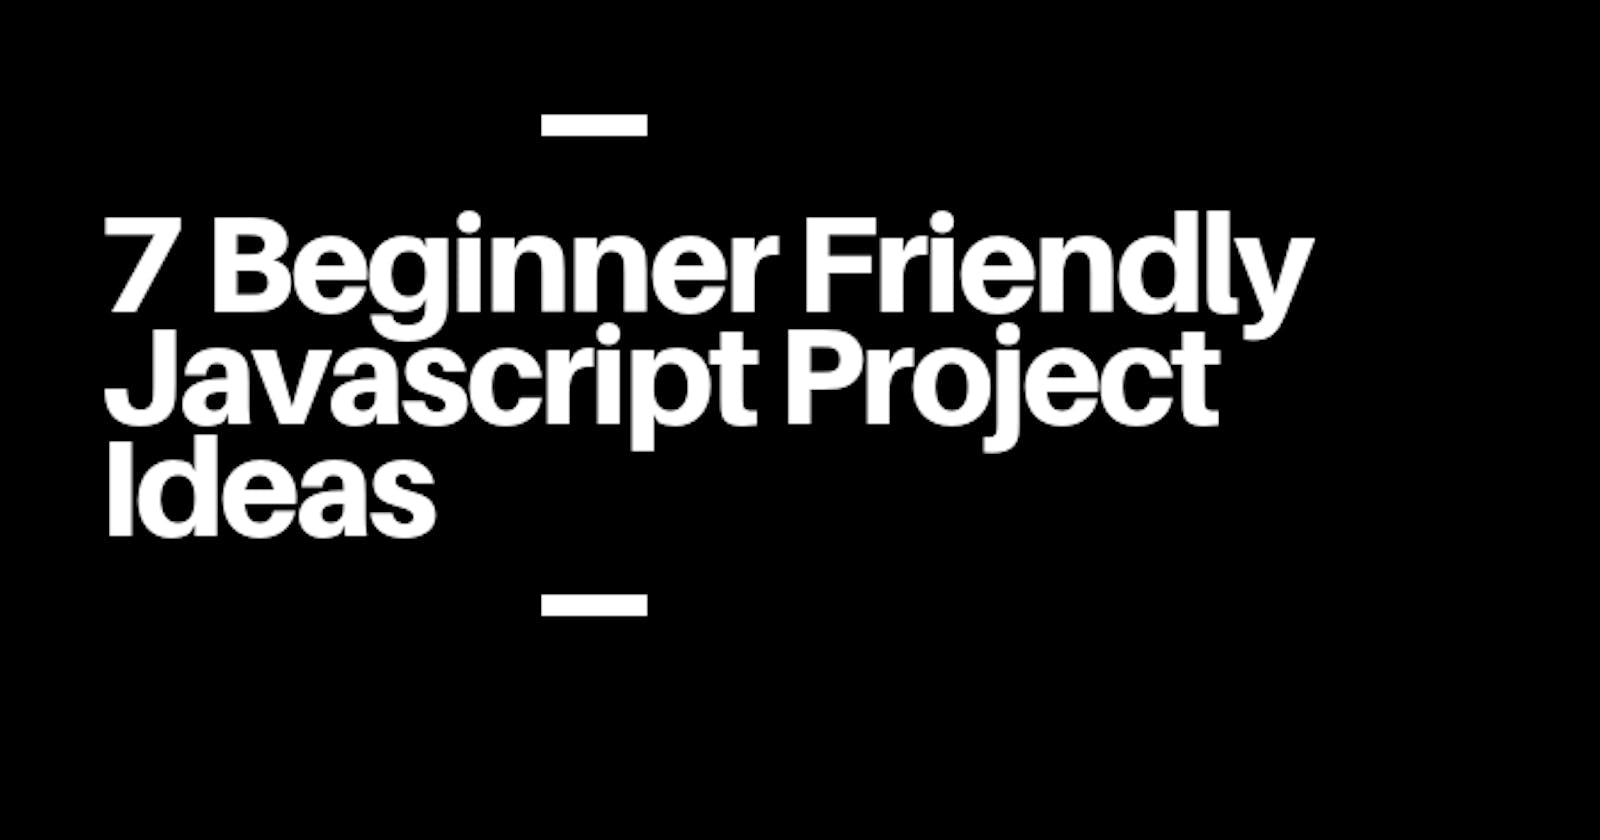 7 Beginner Friendly Javascript Project Ideas